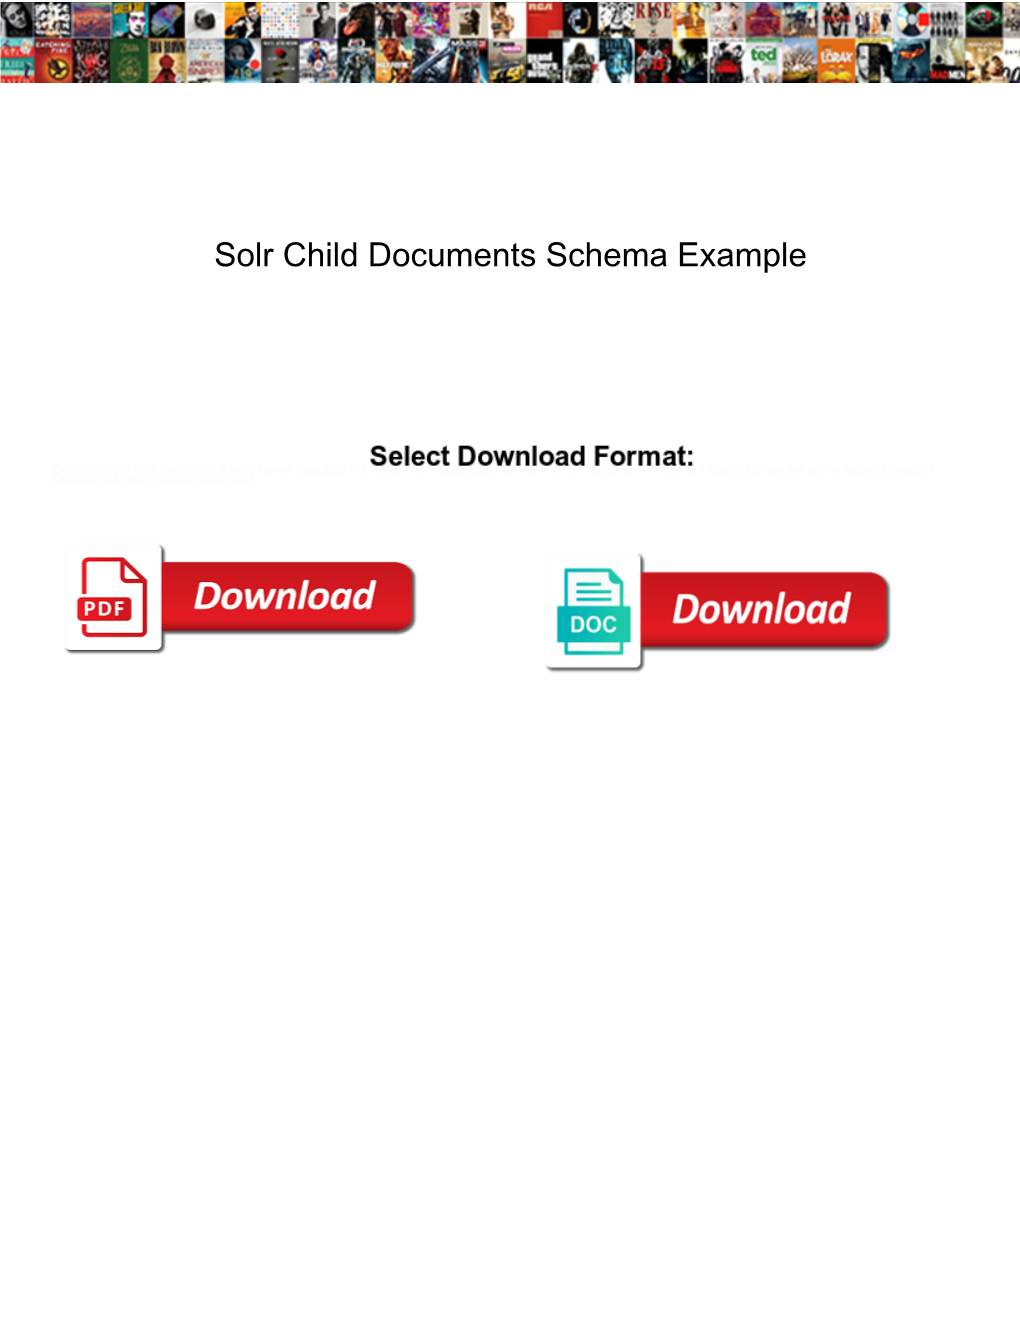 Solr Child Documents Schema Example